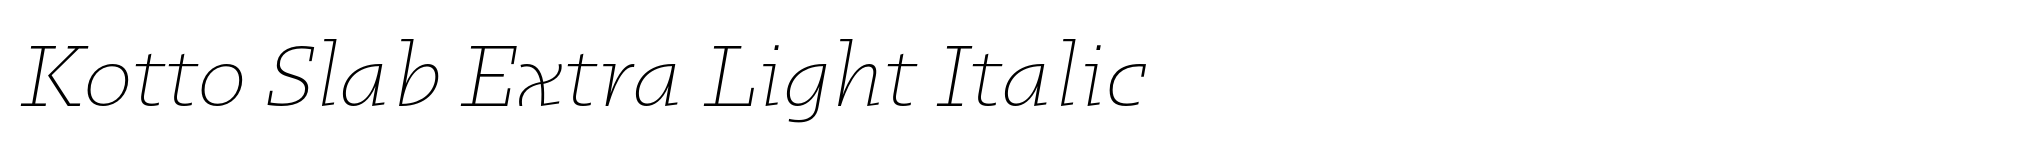 Kotto Slab Extra Light Italic image